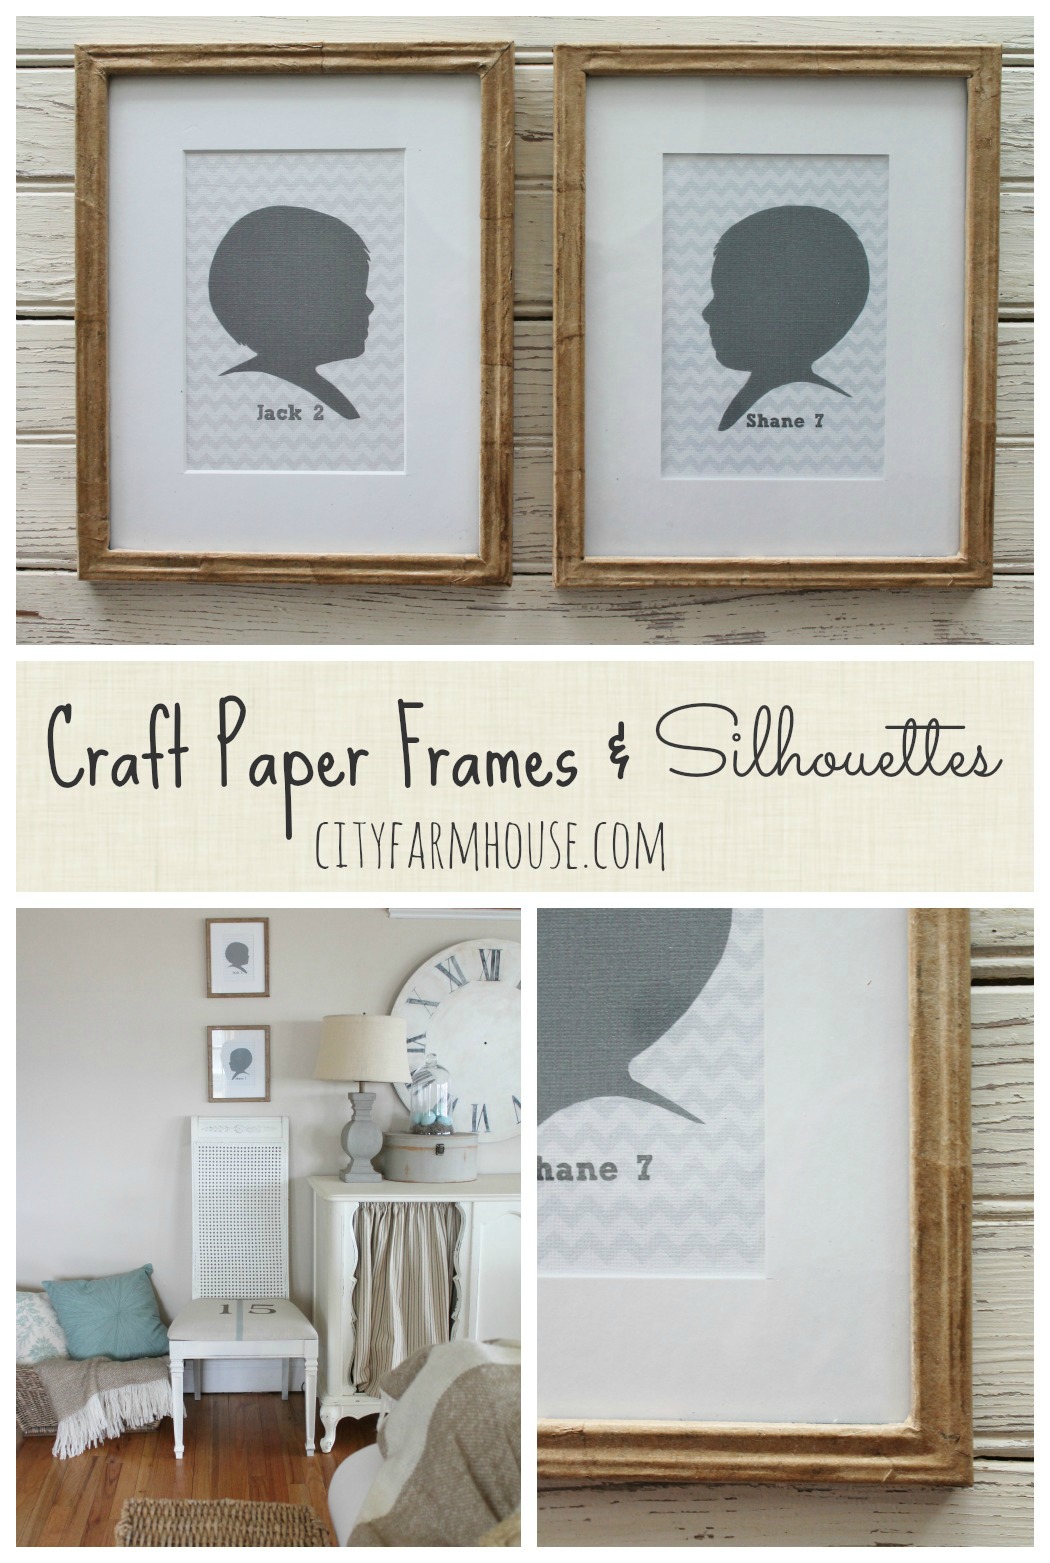 DIY Craft Paper Frames, Silhouettes & Family - City Farmhouse by Jennifer  O'Brien